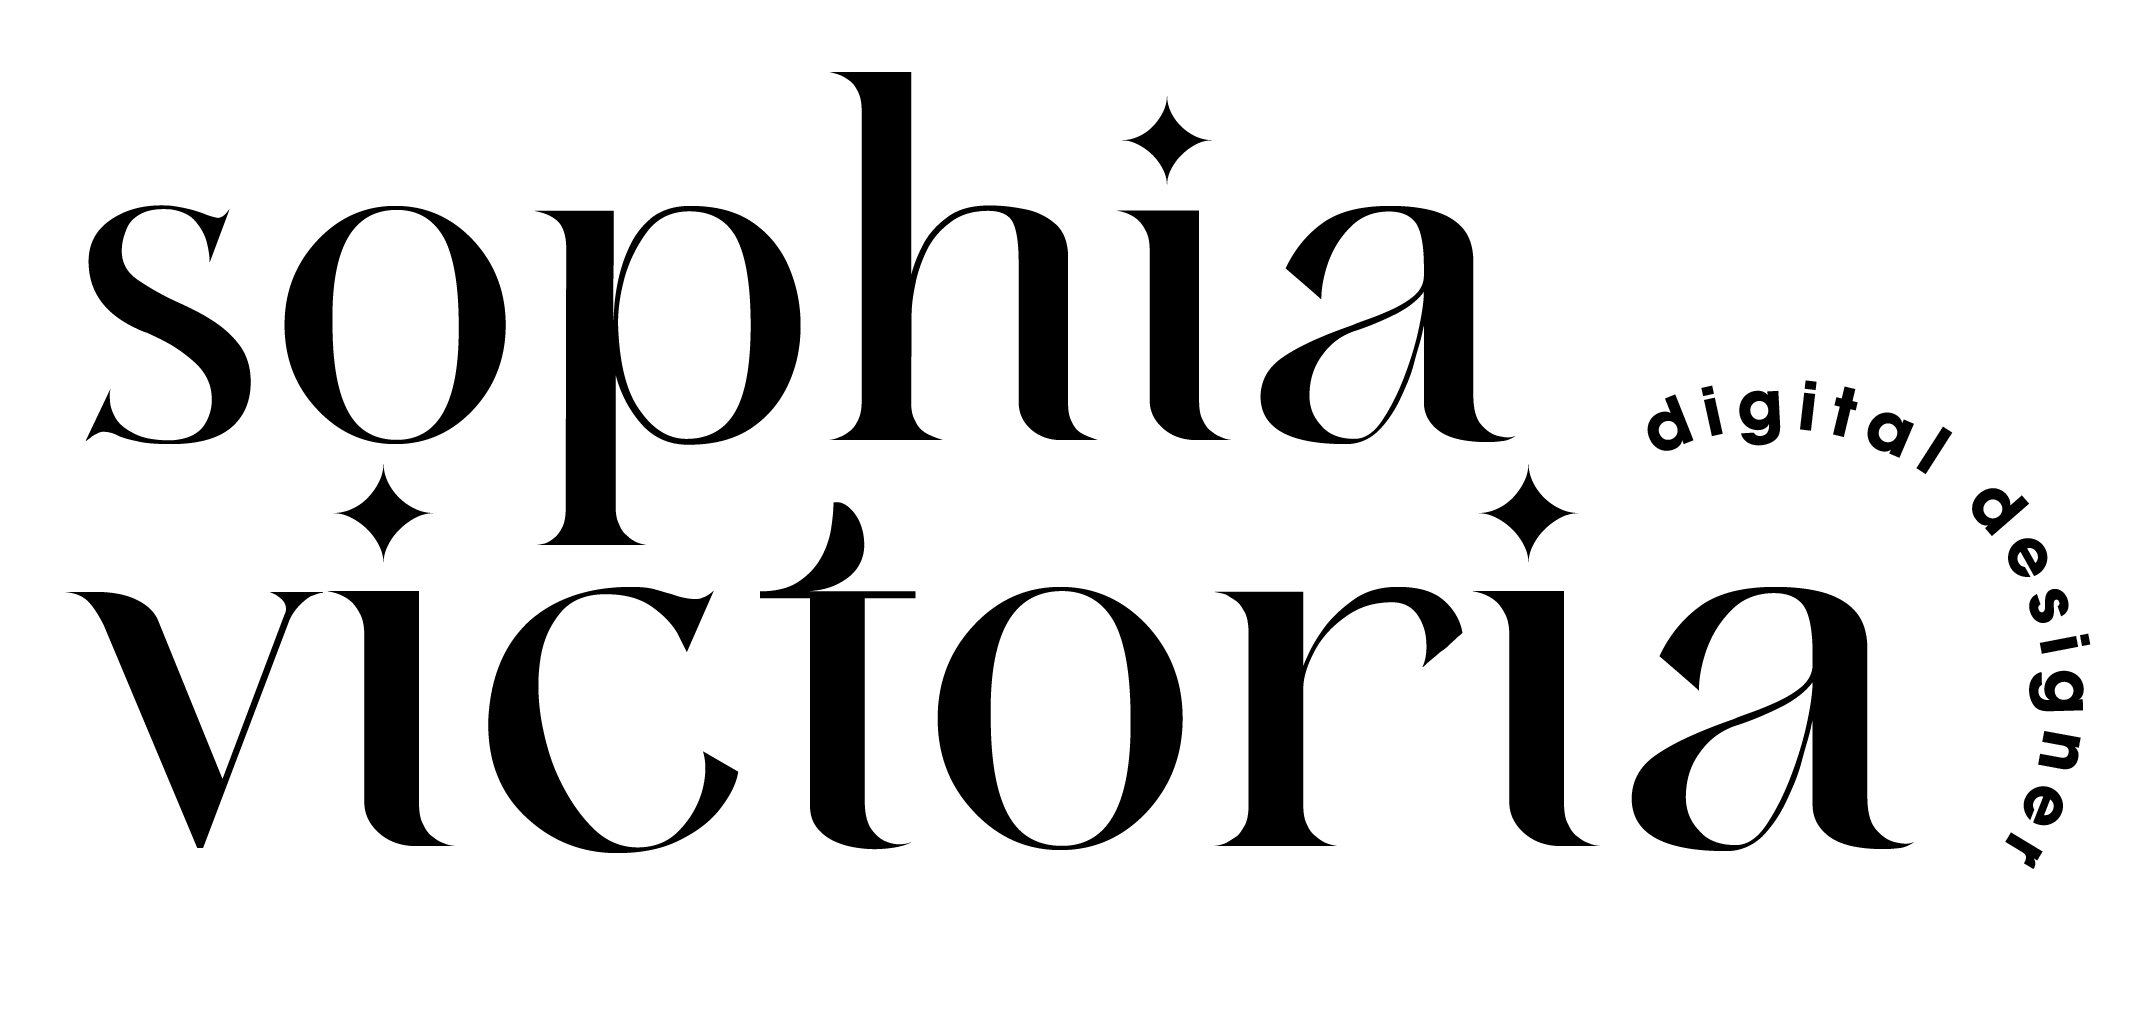 sophia victoria rodriguez